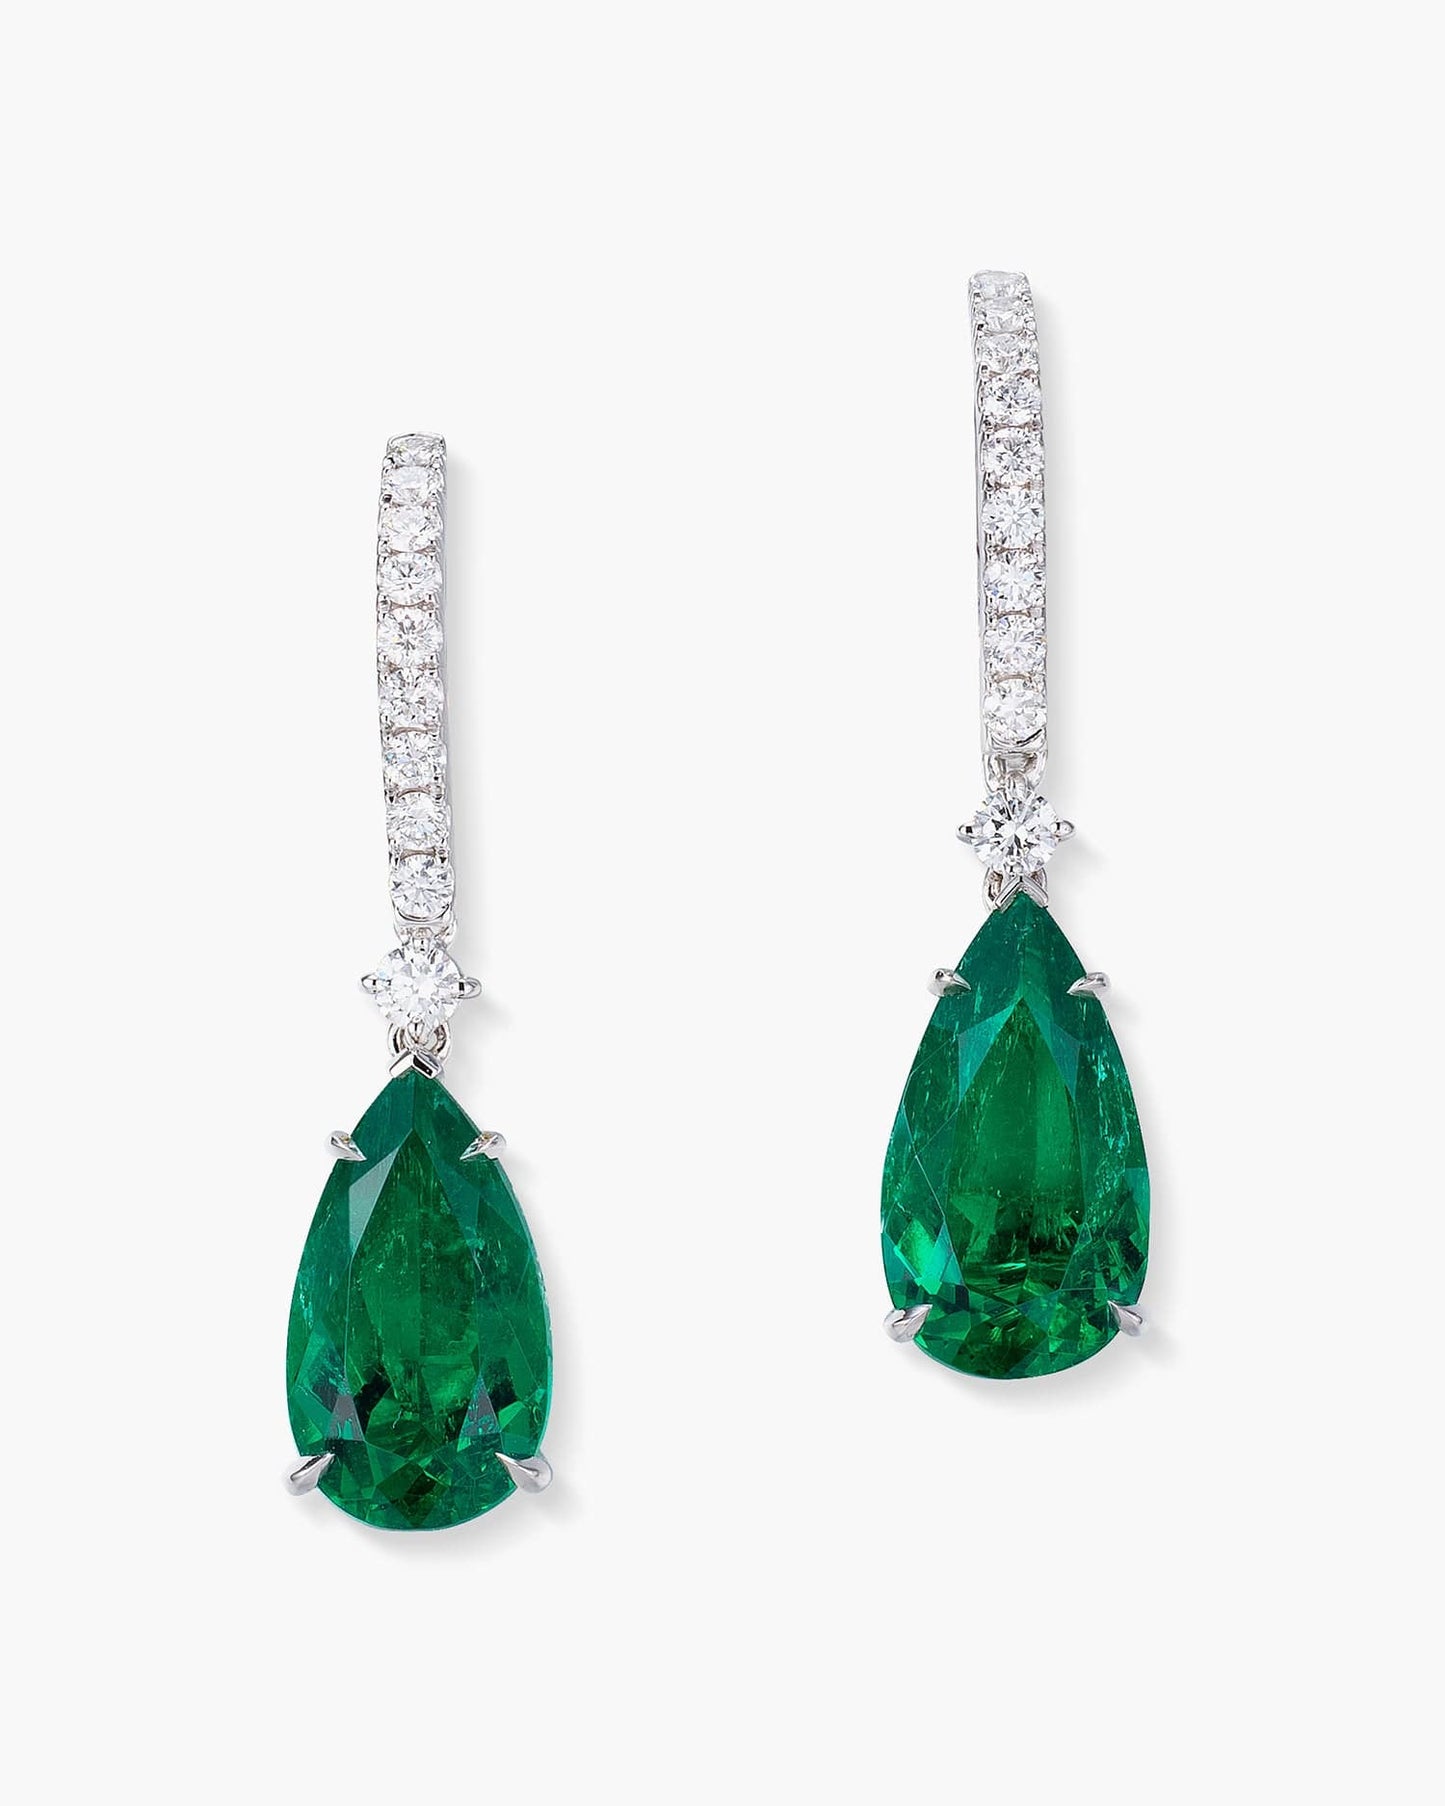 4.42 carat Pear Shape Colombian Emerald and Diamond Earrings